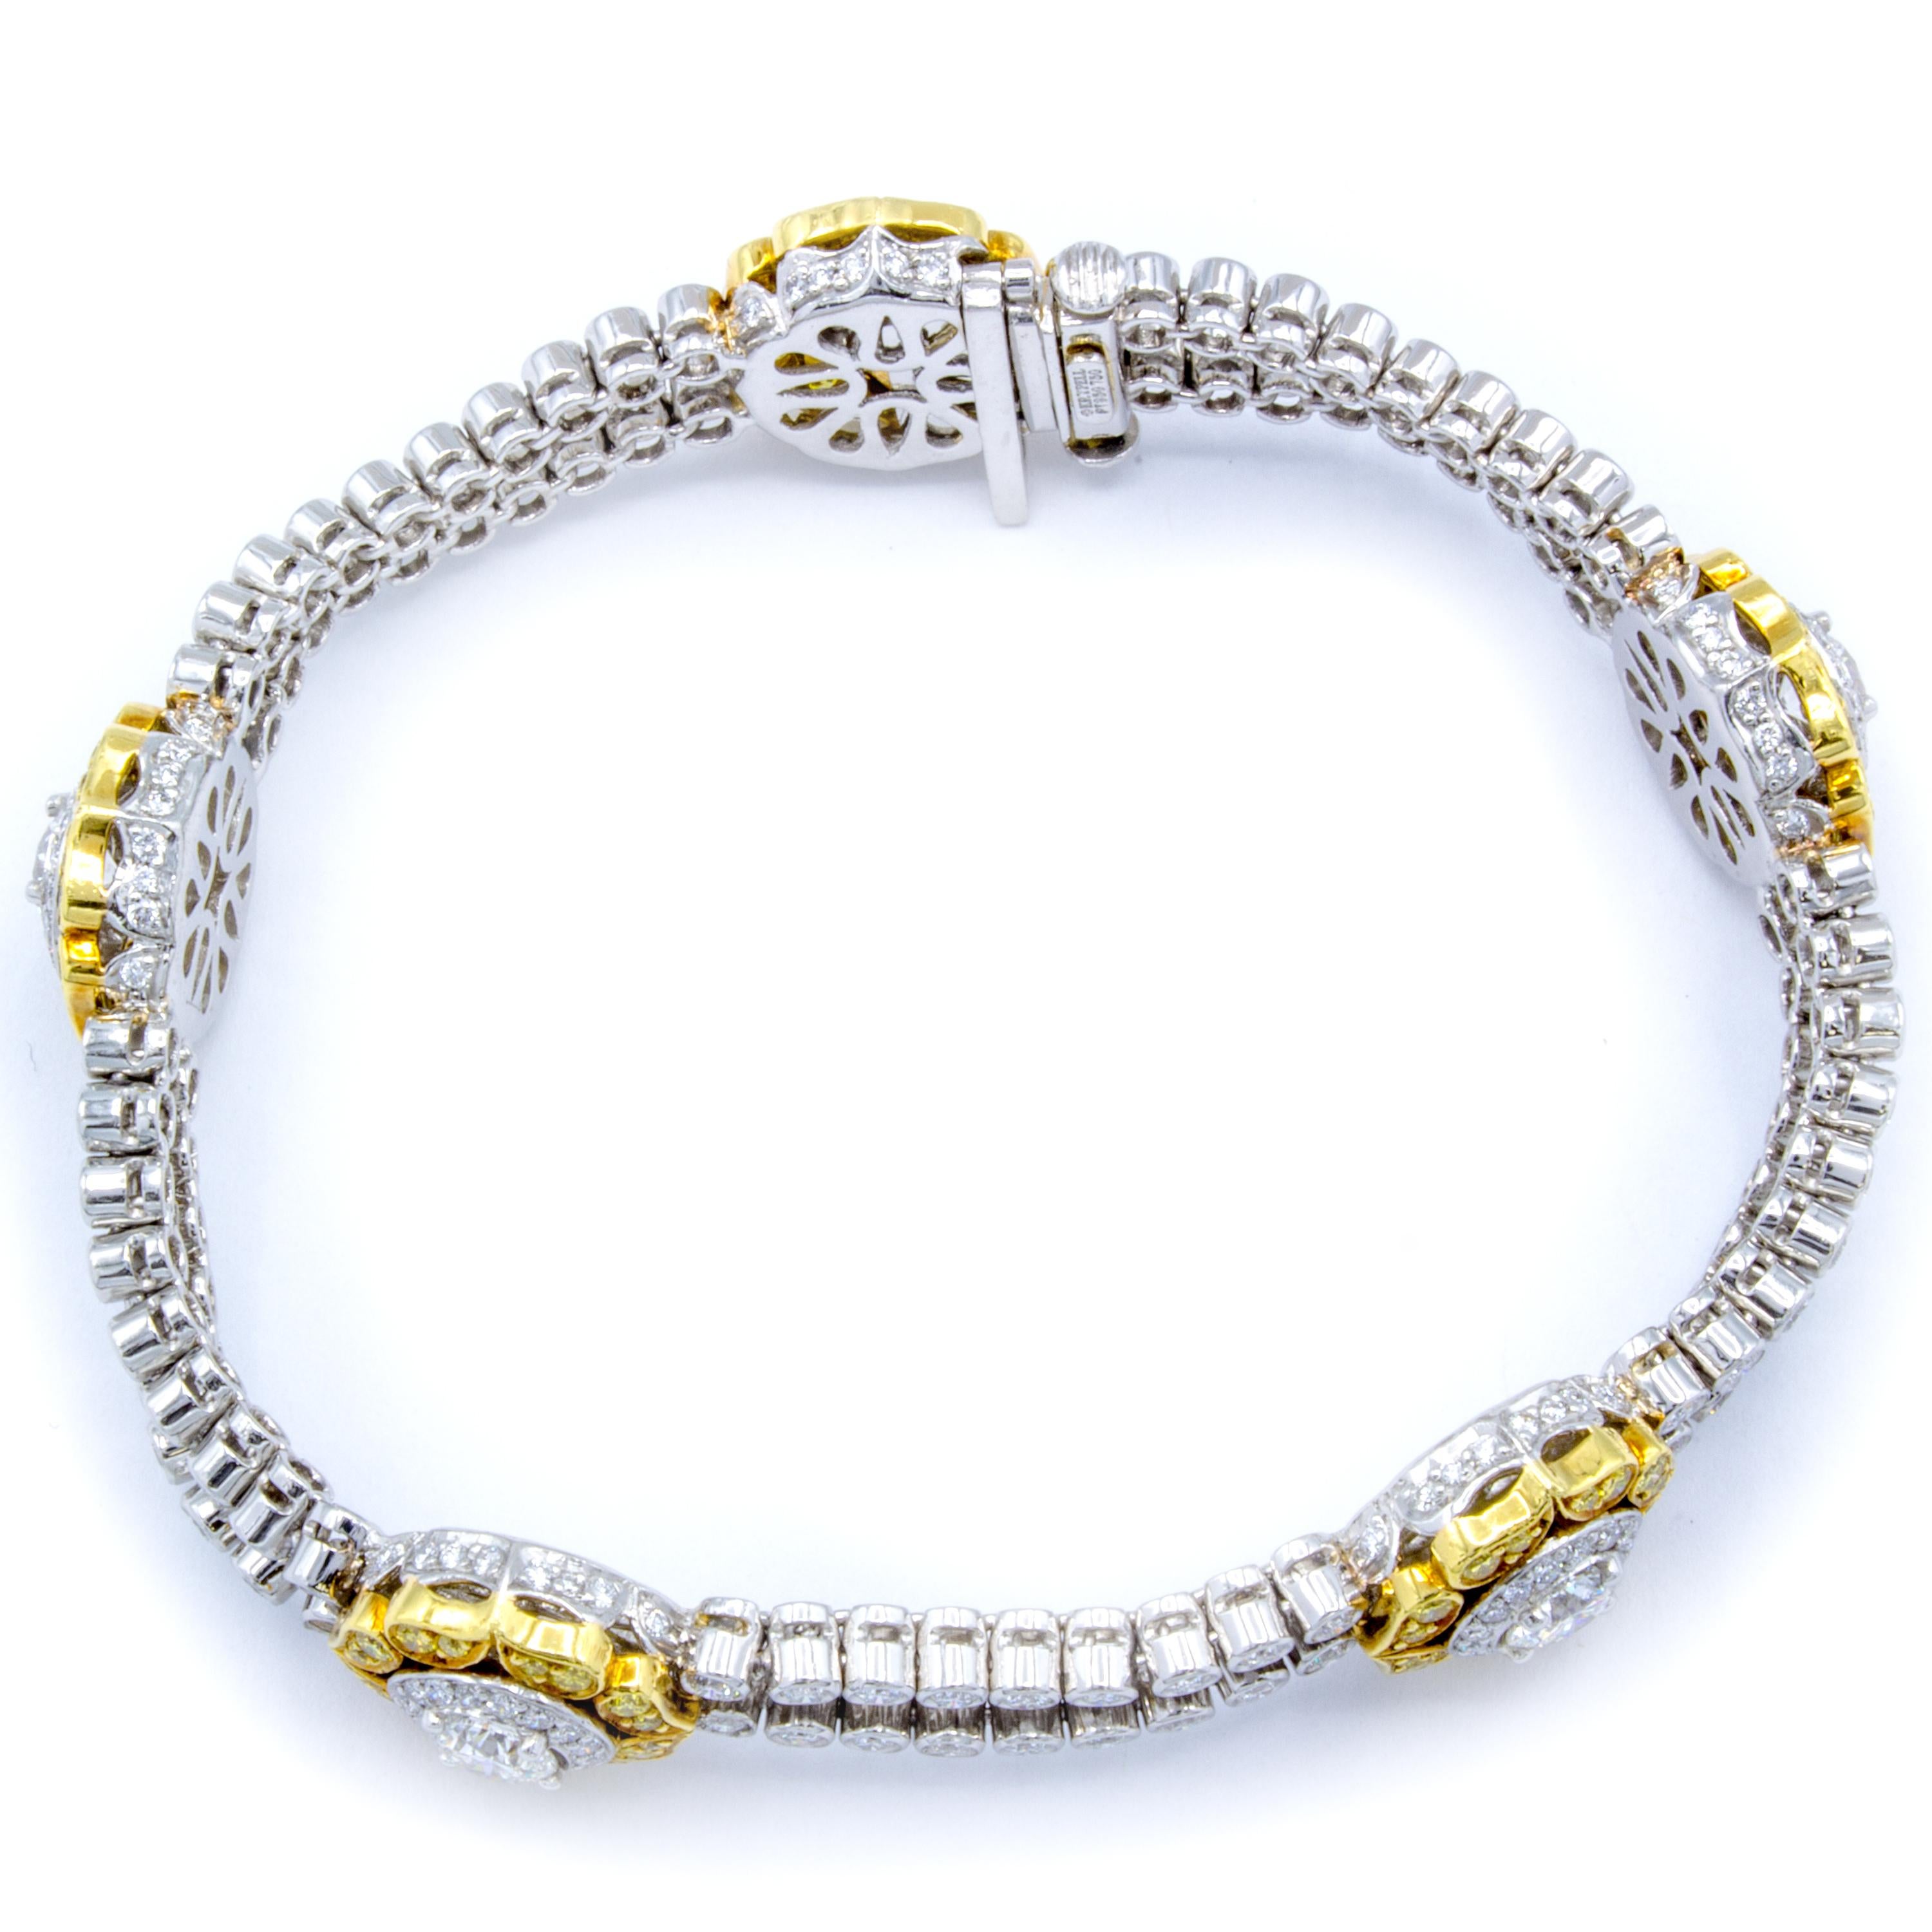 Women's David Rosenberg 5.77 Total Carats White and Natural Fancy Diamond Bracelet